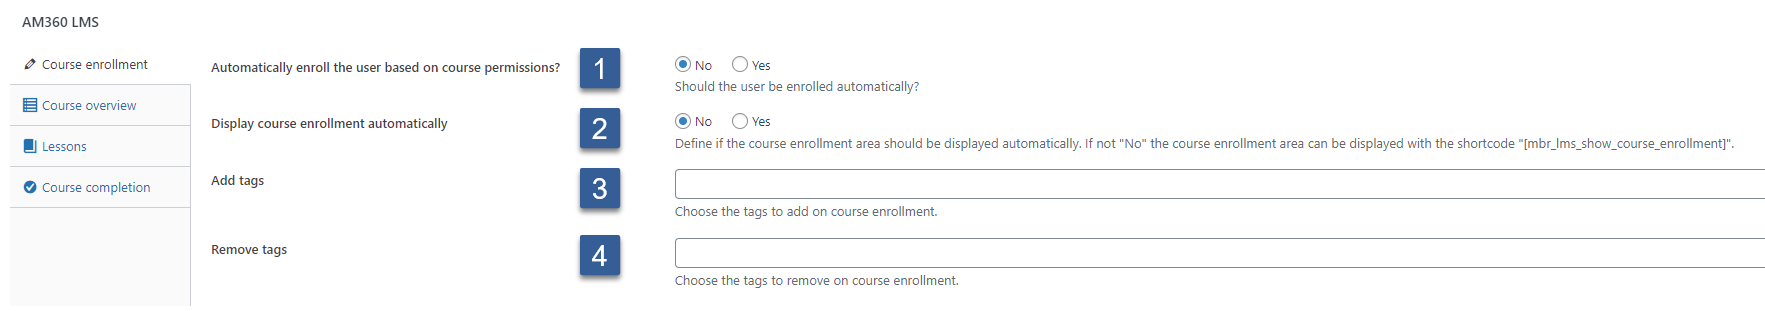 How to create a course - Course enrollment